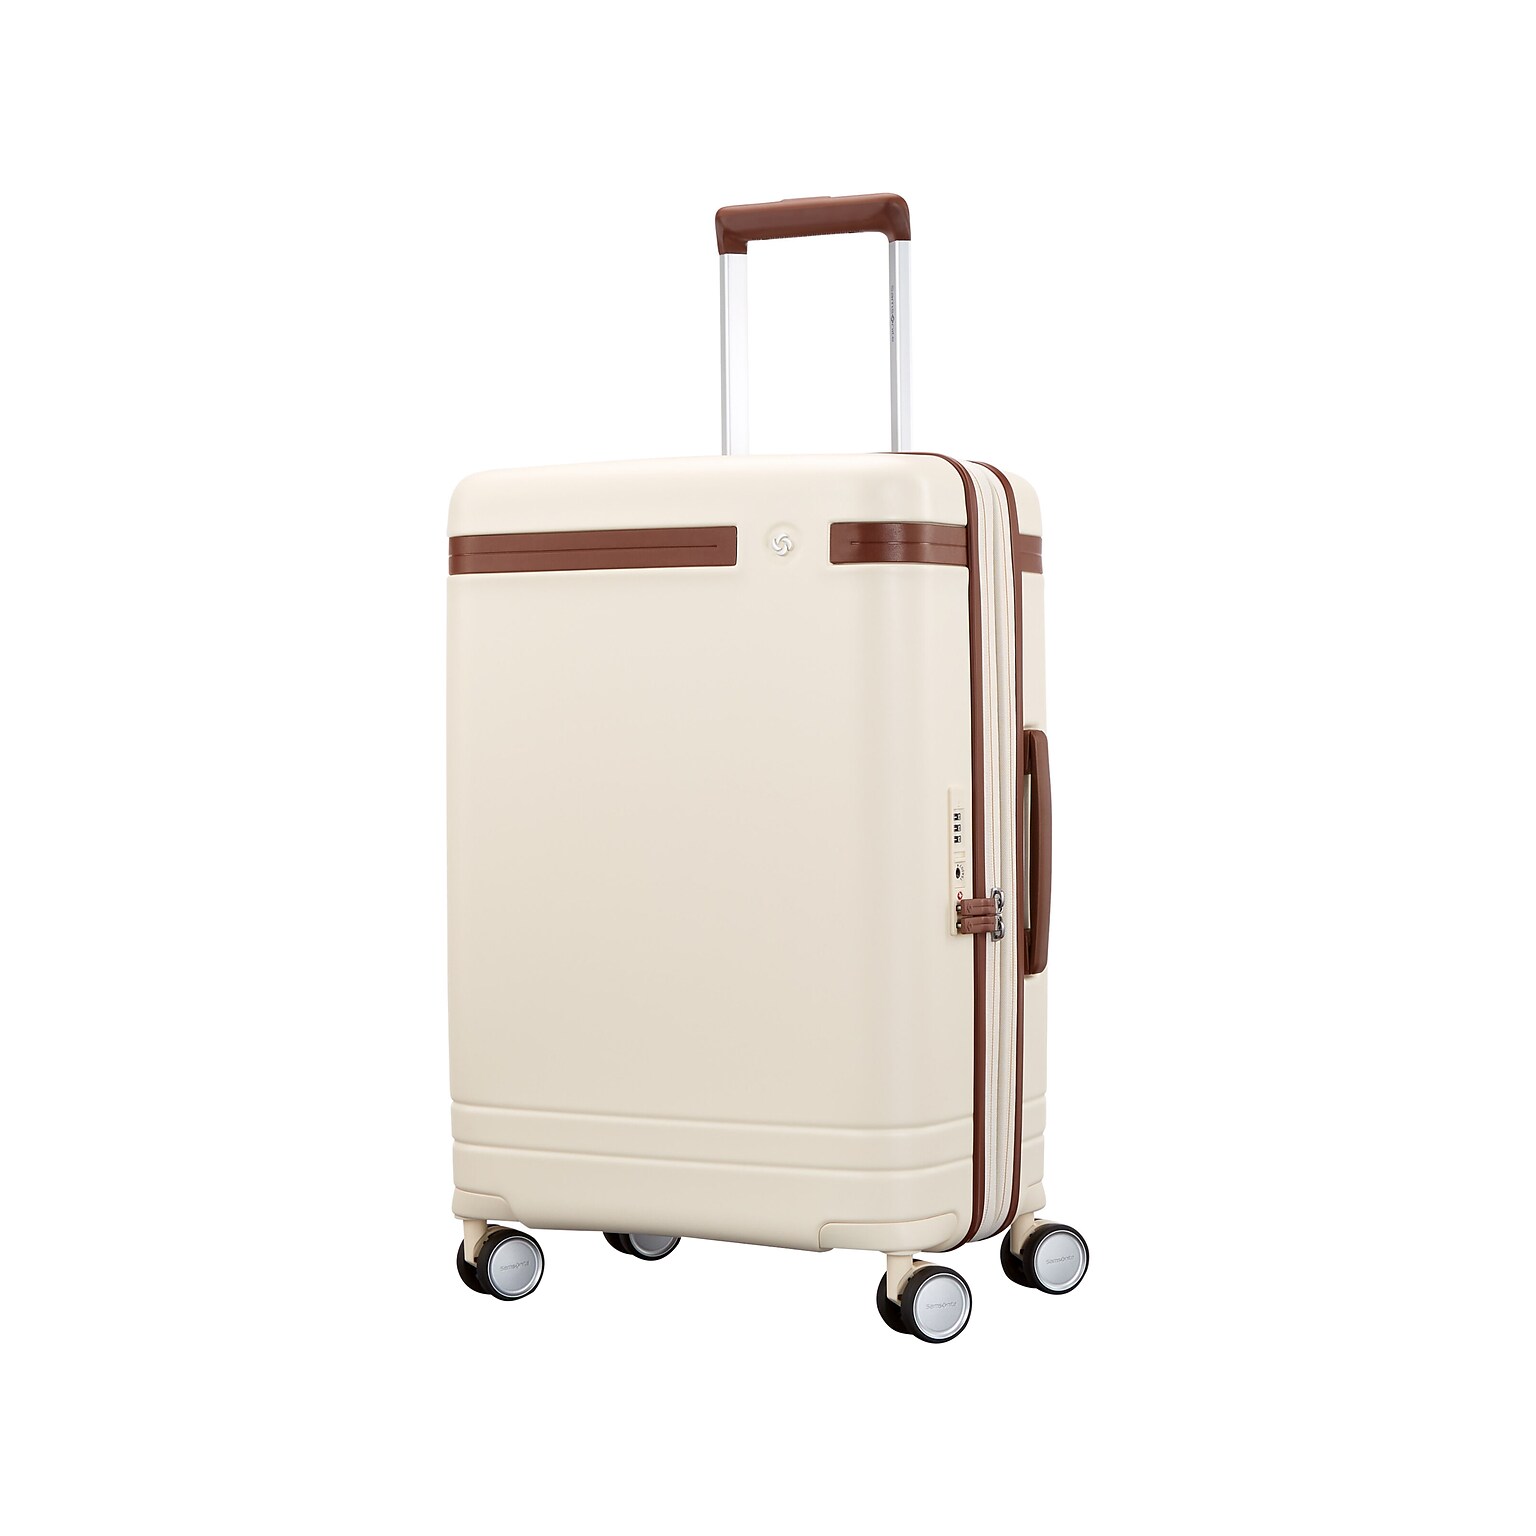 Samsonite Virtuosa 23 Hardside Carry-On Suitcase, 4-Wheeled Spinner, TSA Checkpoint Friendly, Off-White (149176-1627)